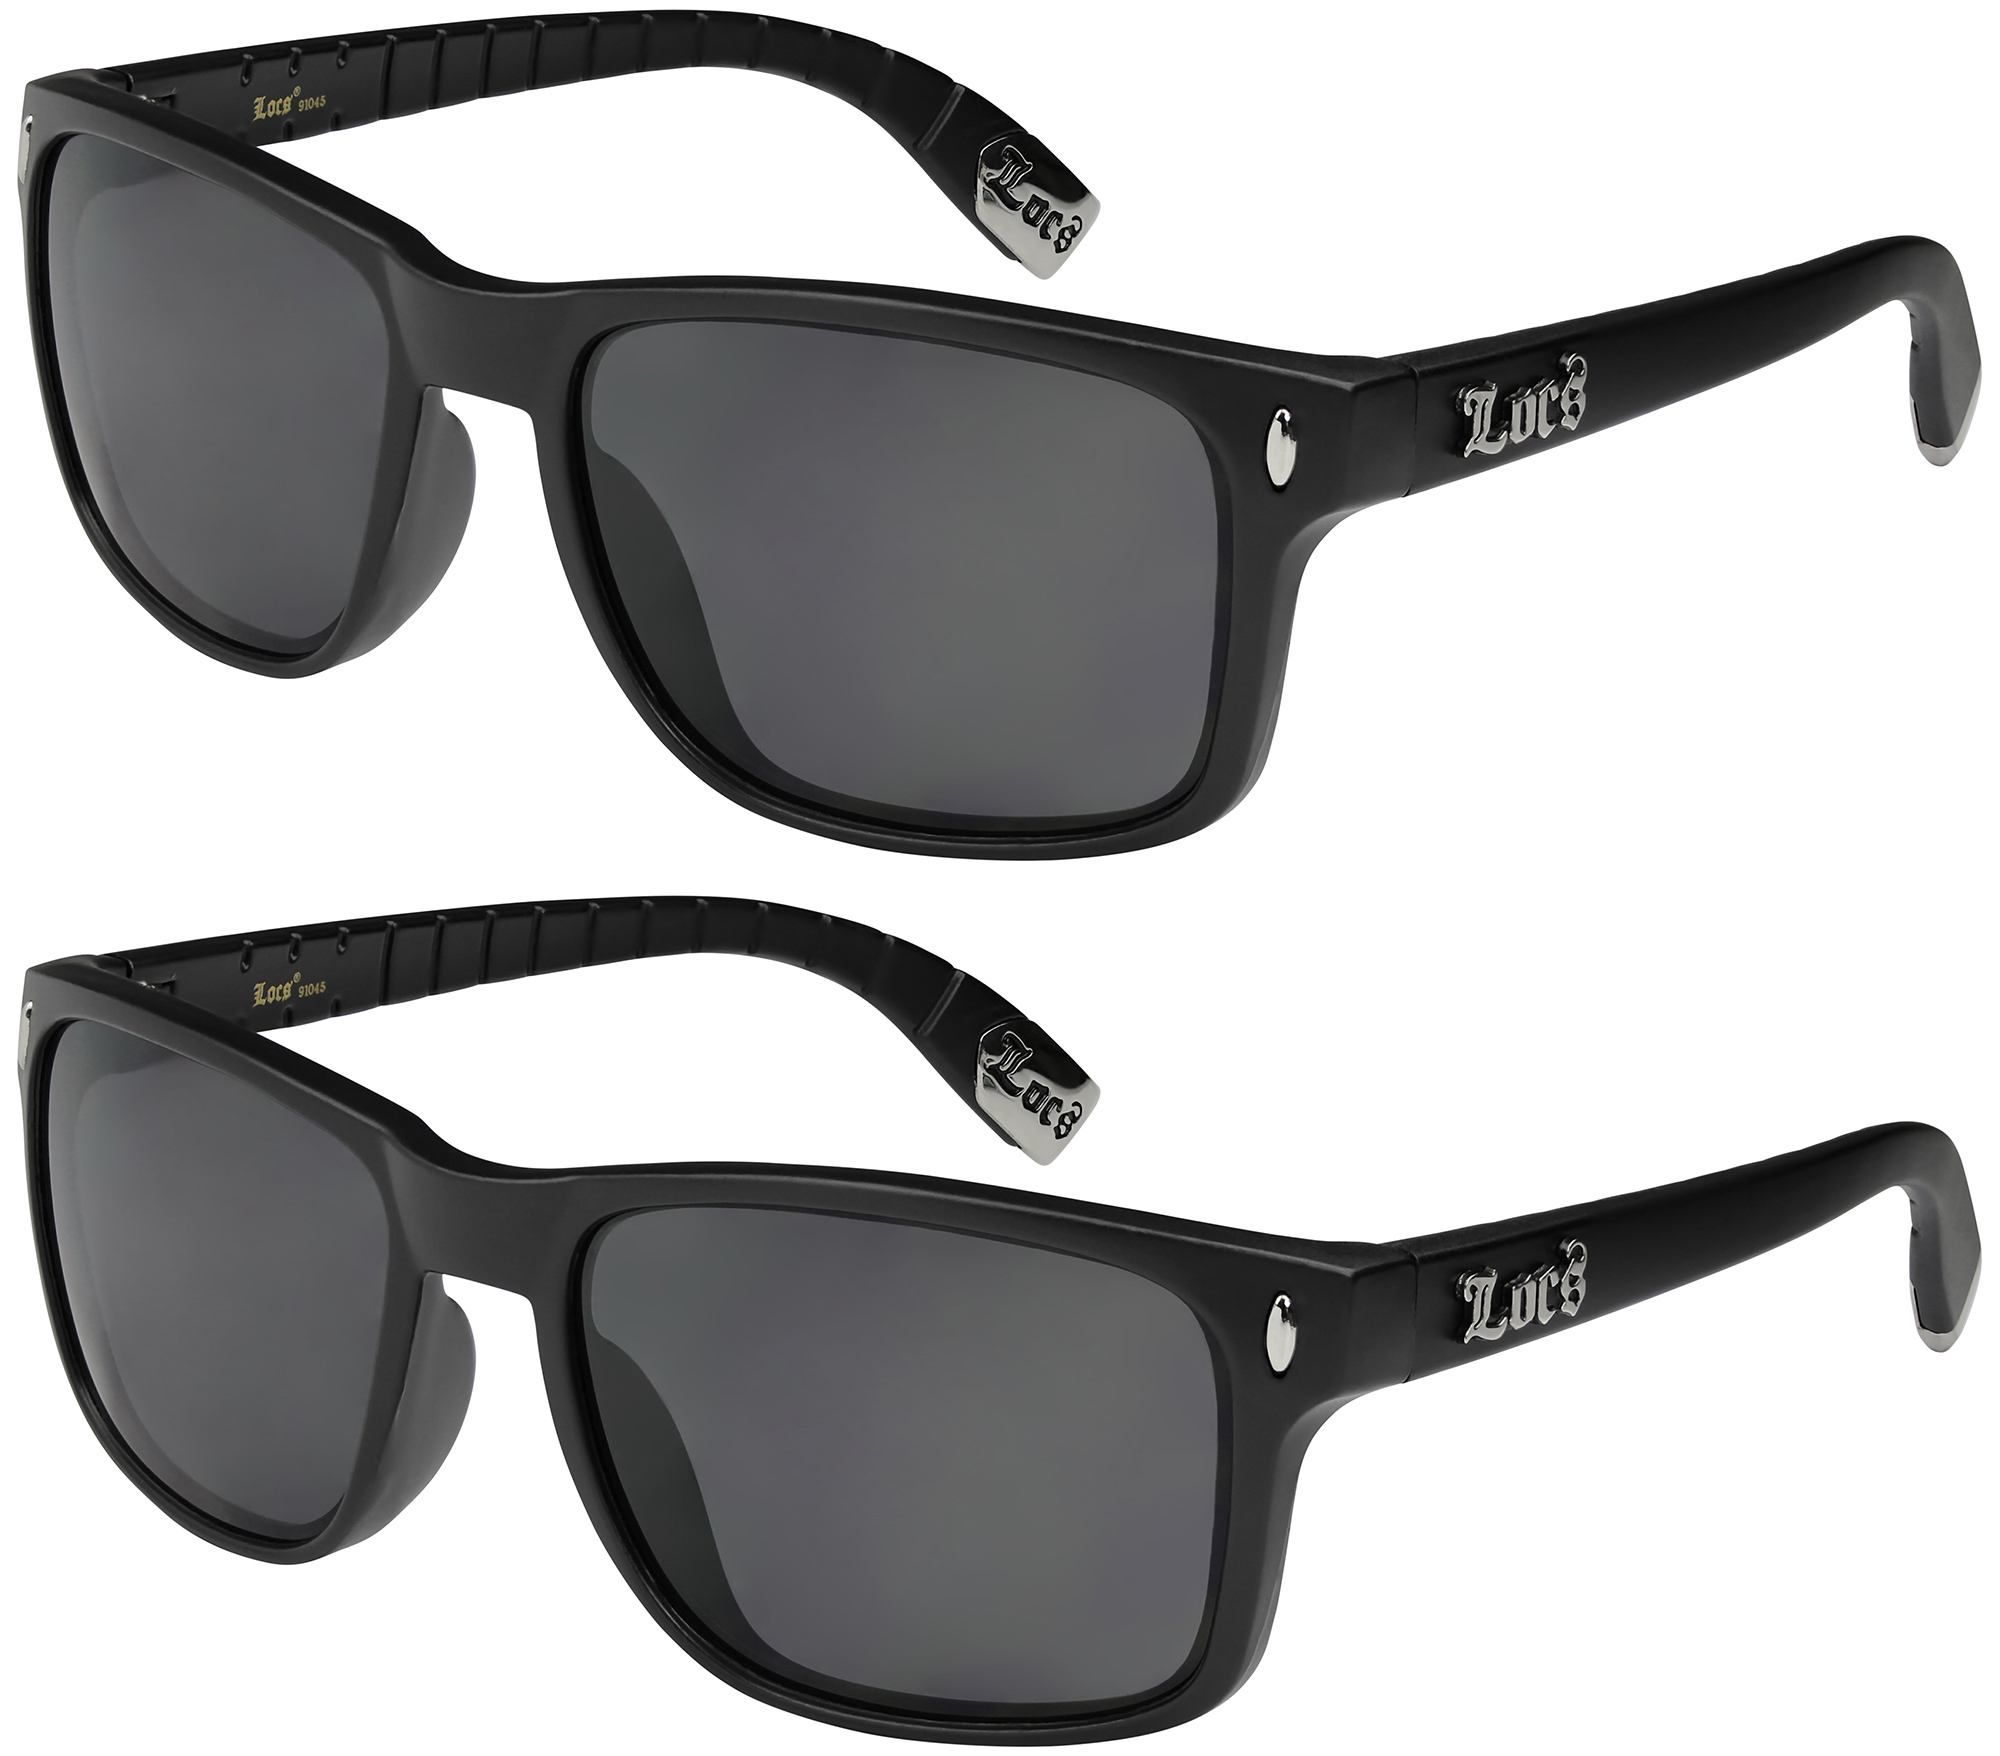 2er Pack Choppers 911 Locs Motorradbrille Klar Brille Männer Frauen schwarz grau 